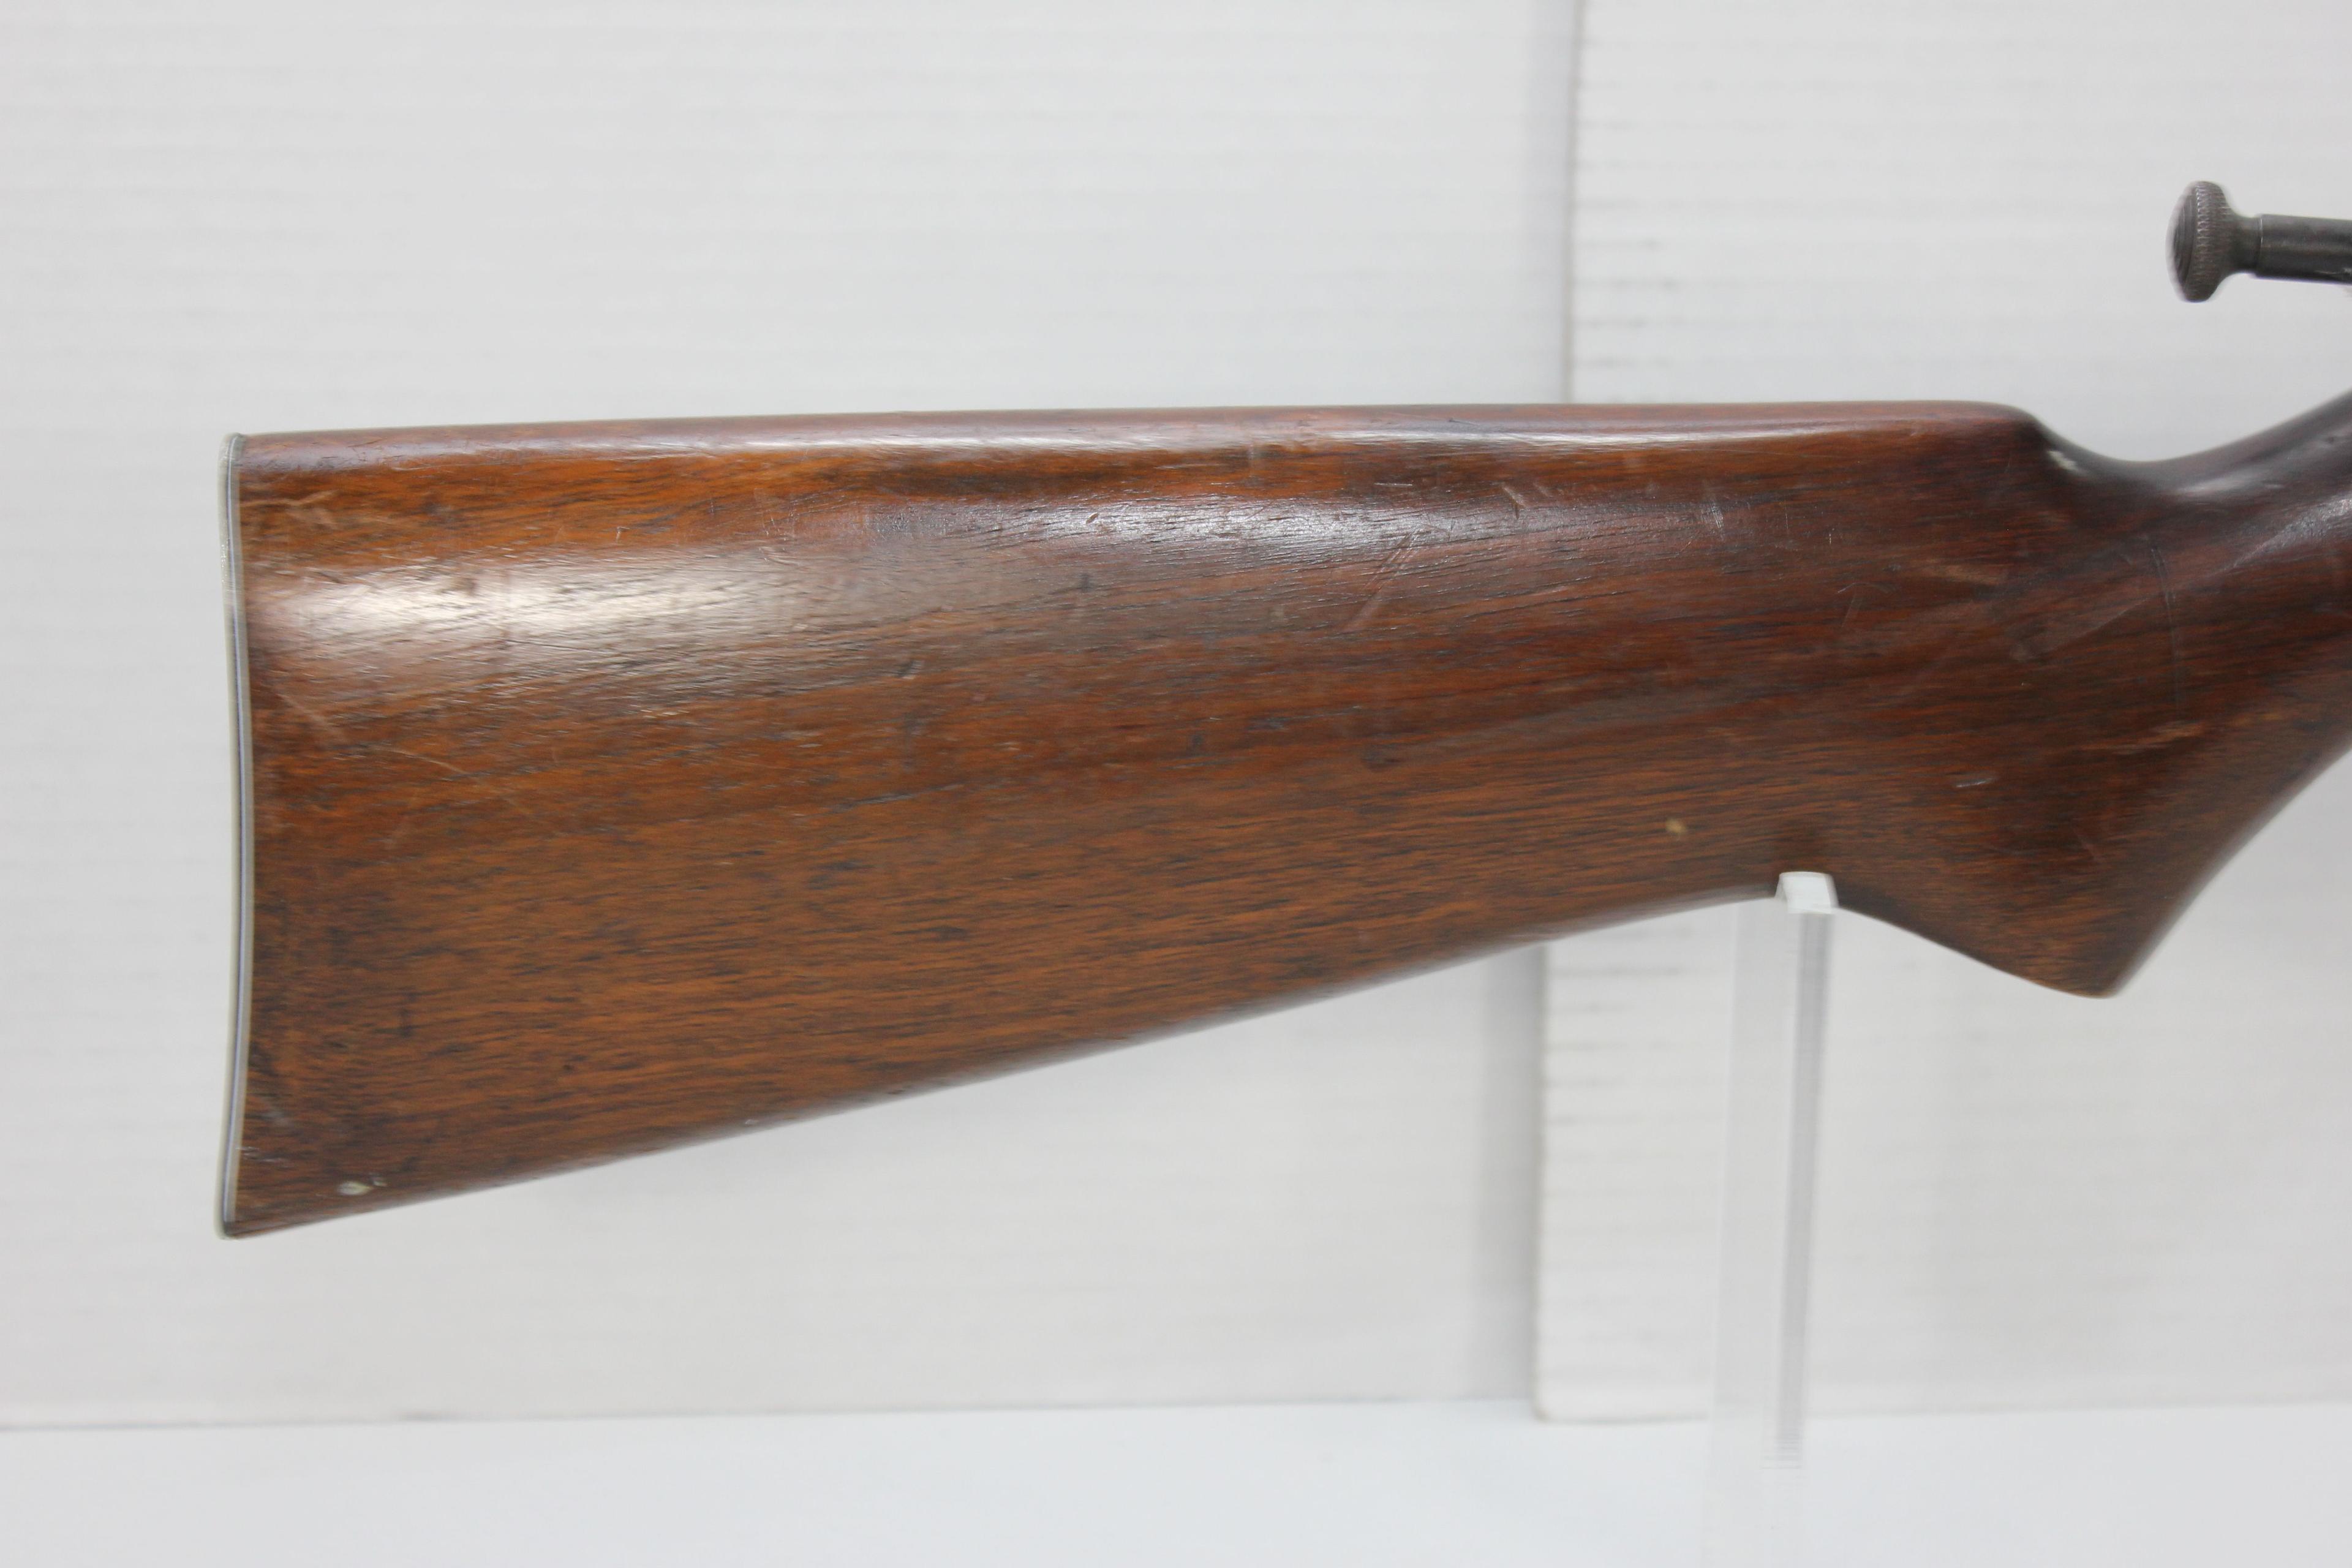 Remington Model 33 .22 S/L/LR Single Shot Bolt Action Rifle; SN 218501